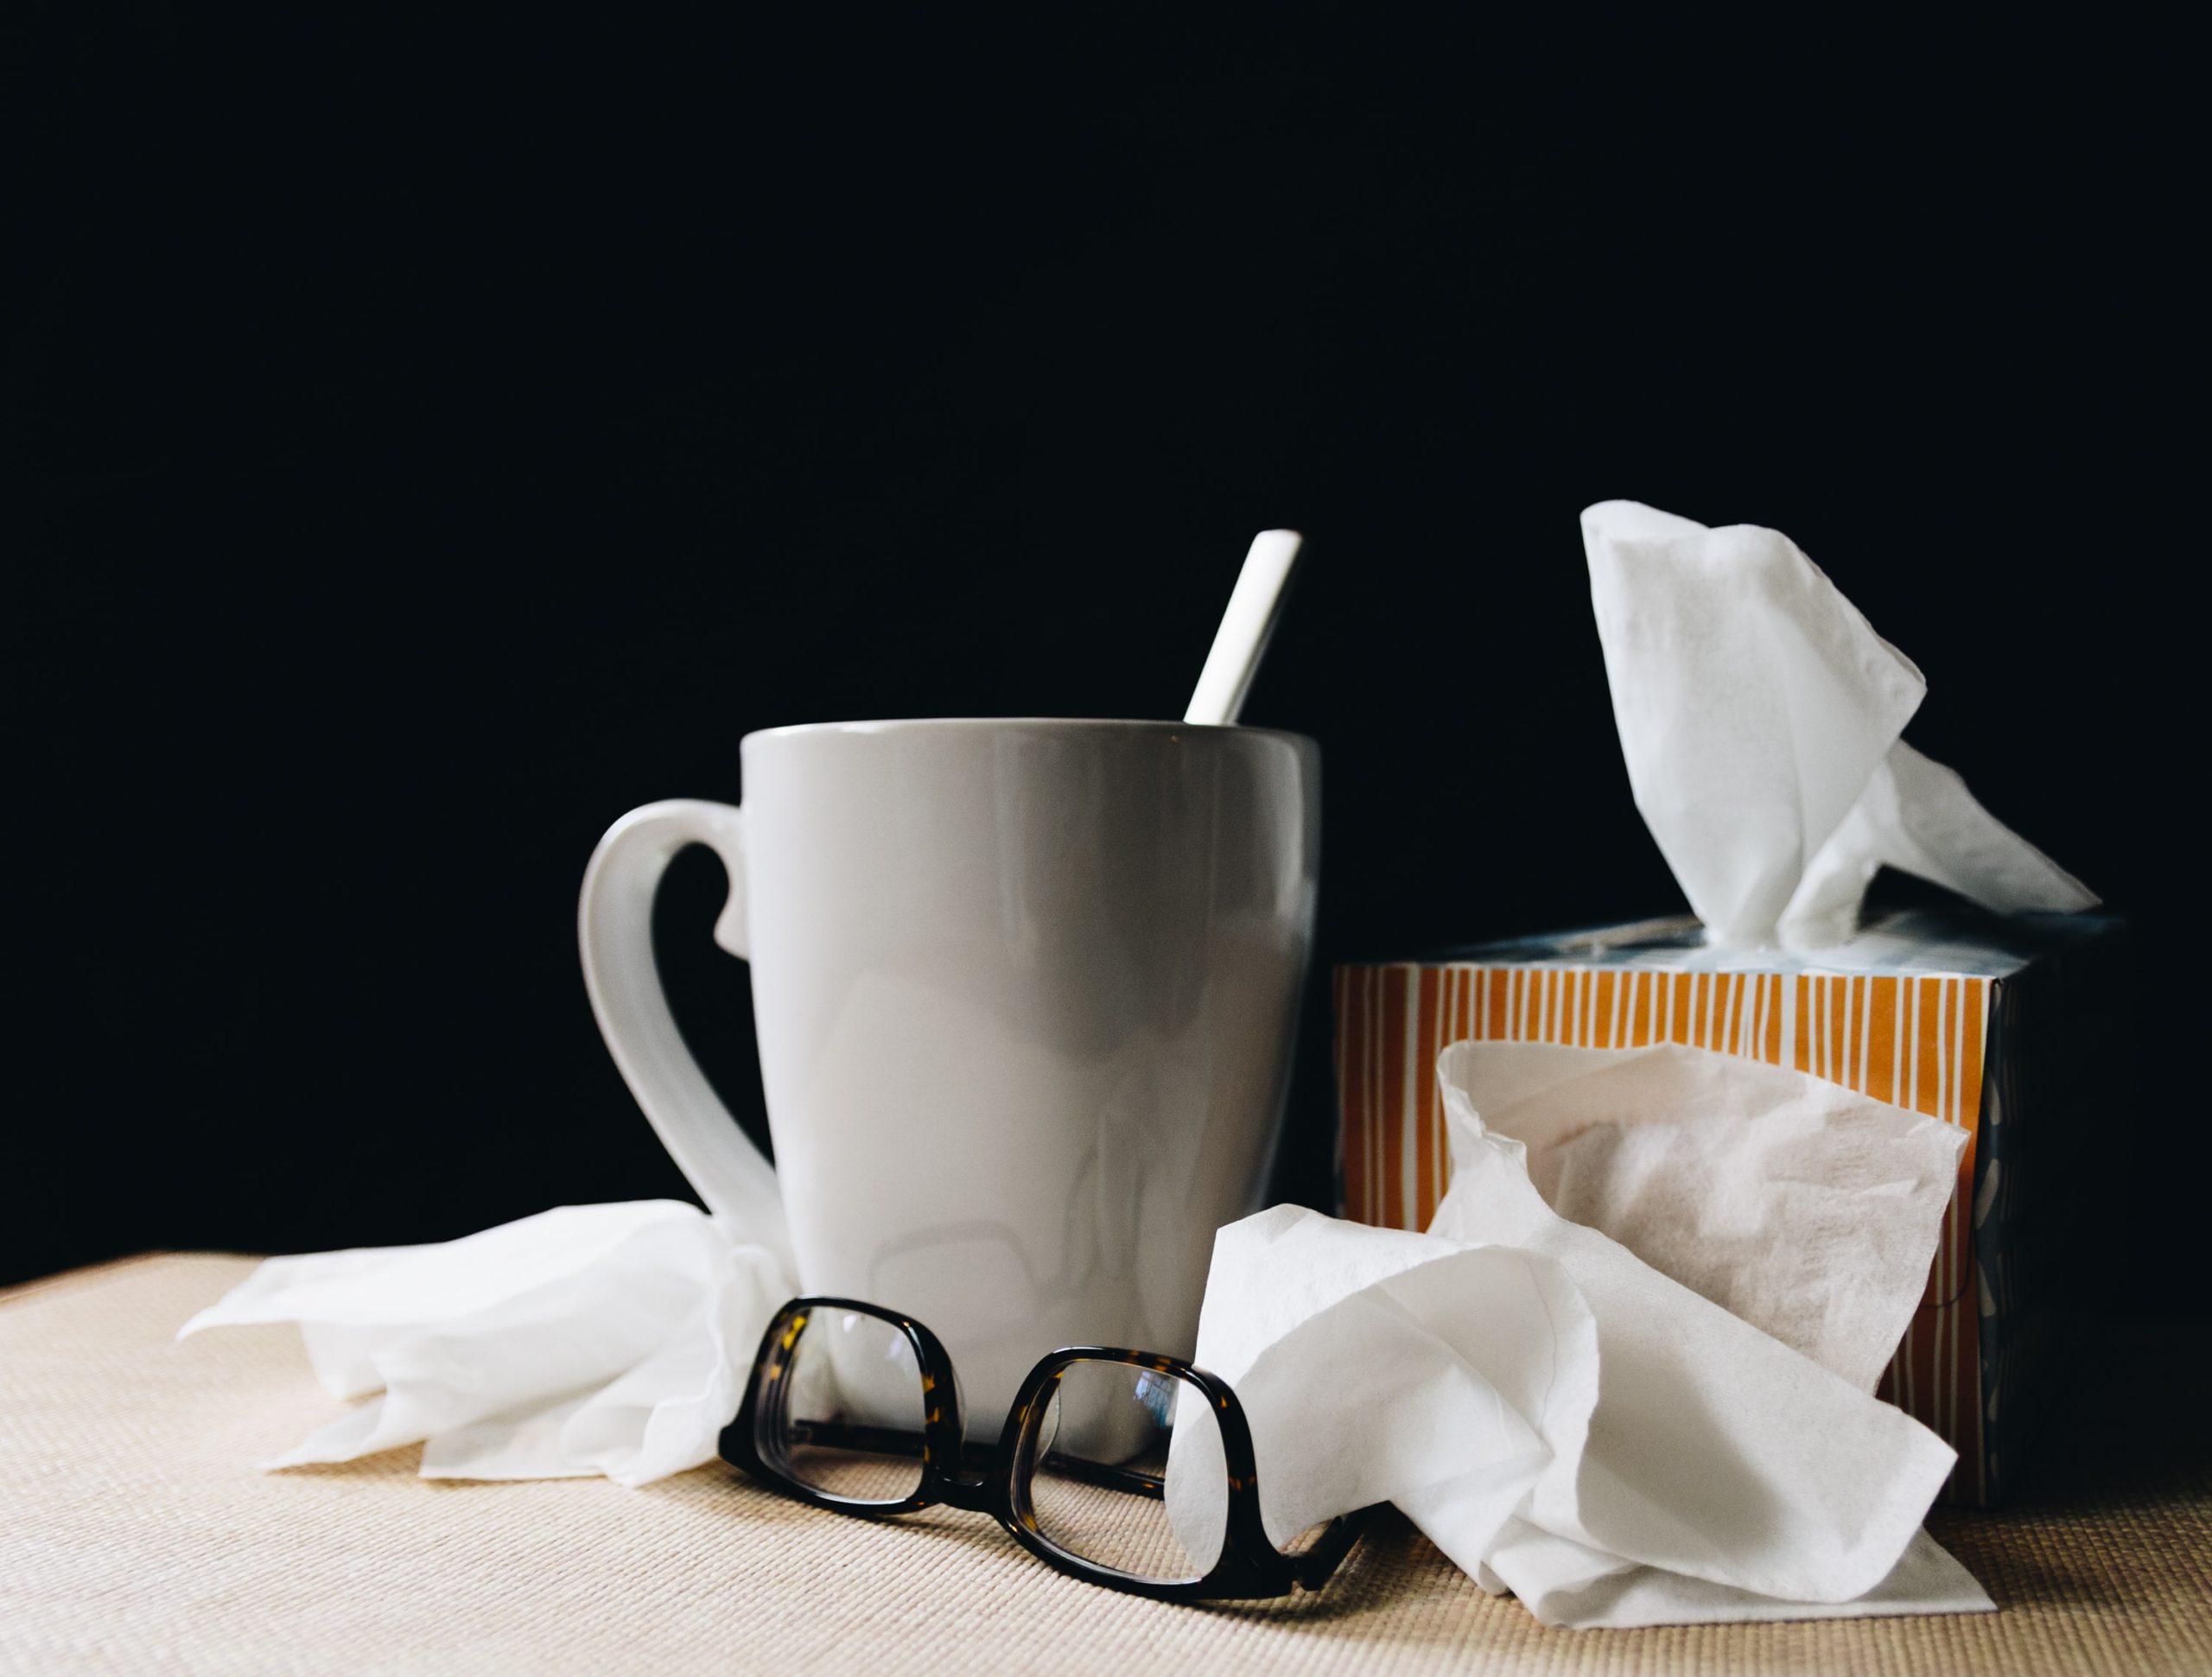 How to Prepare for Flu Season